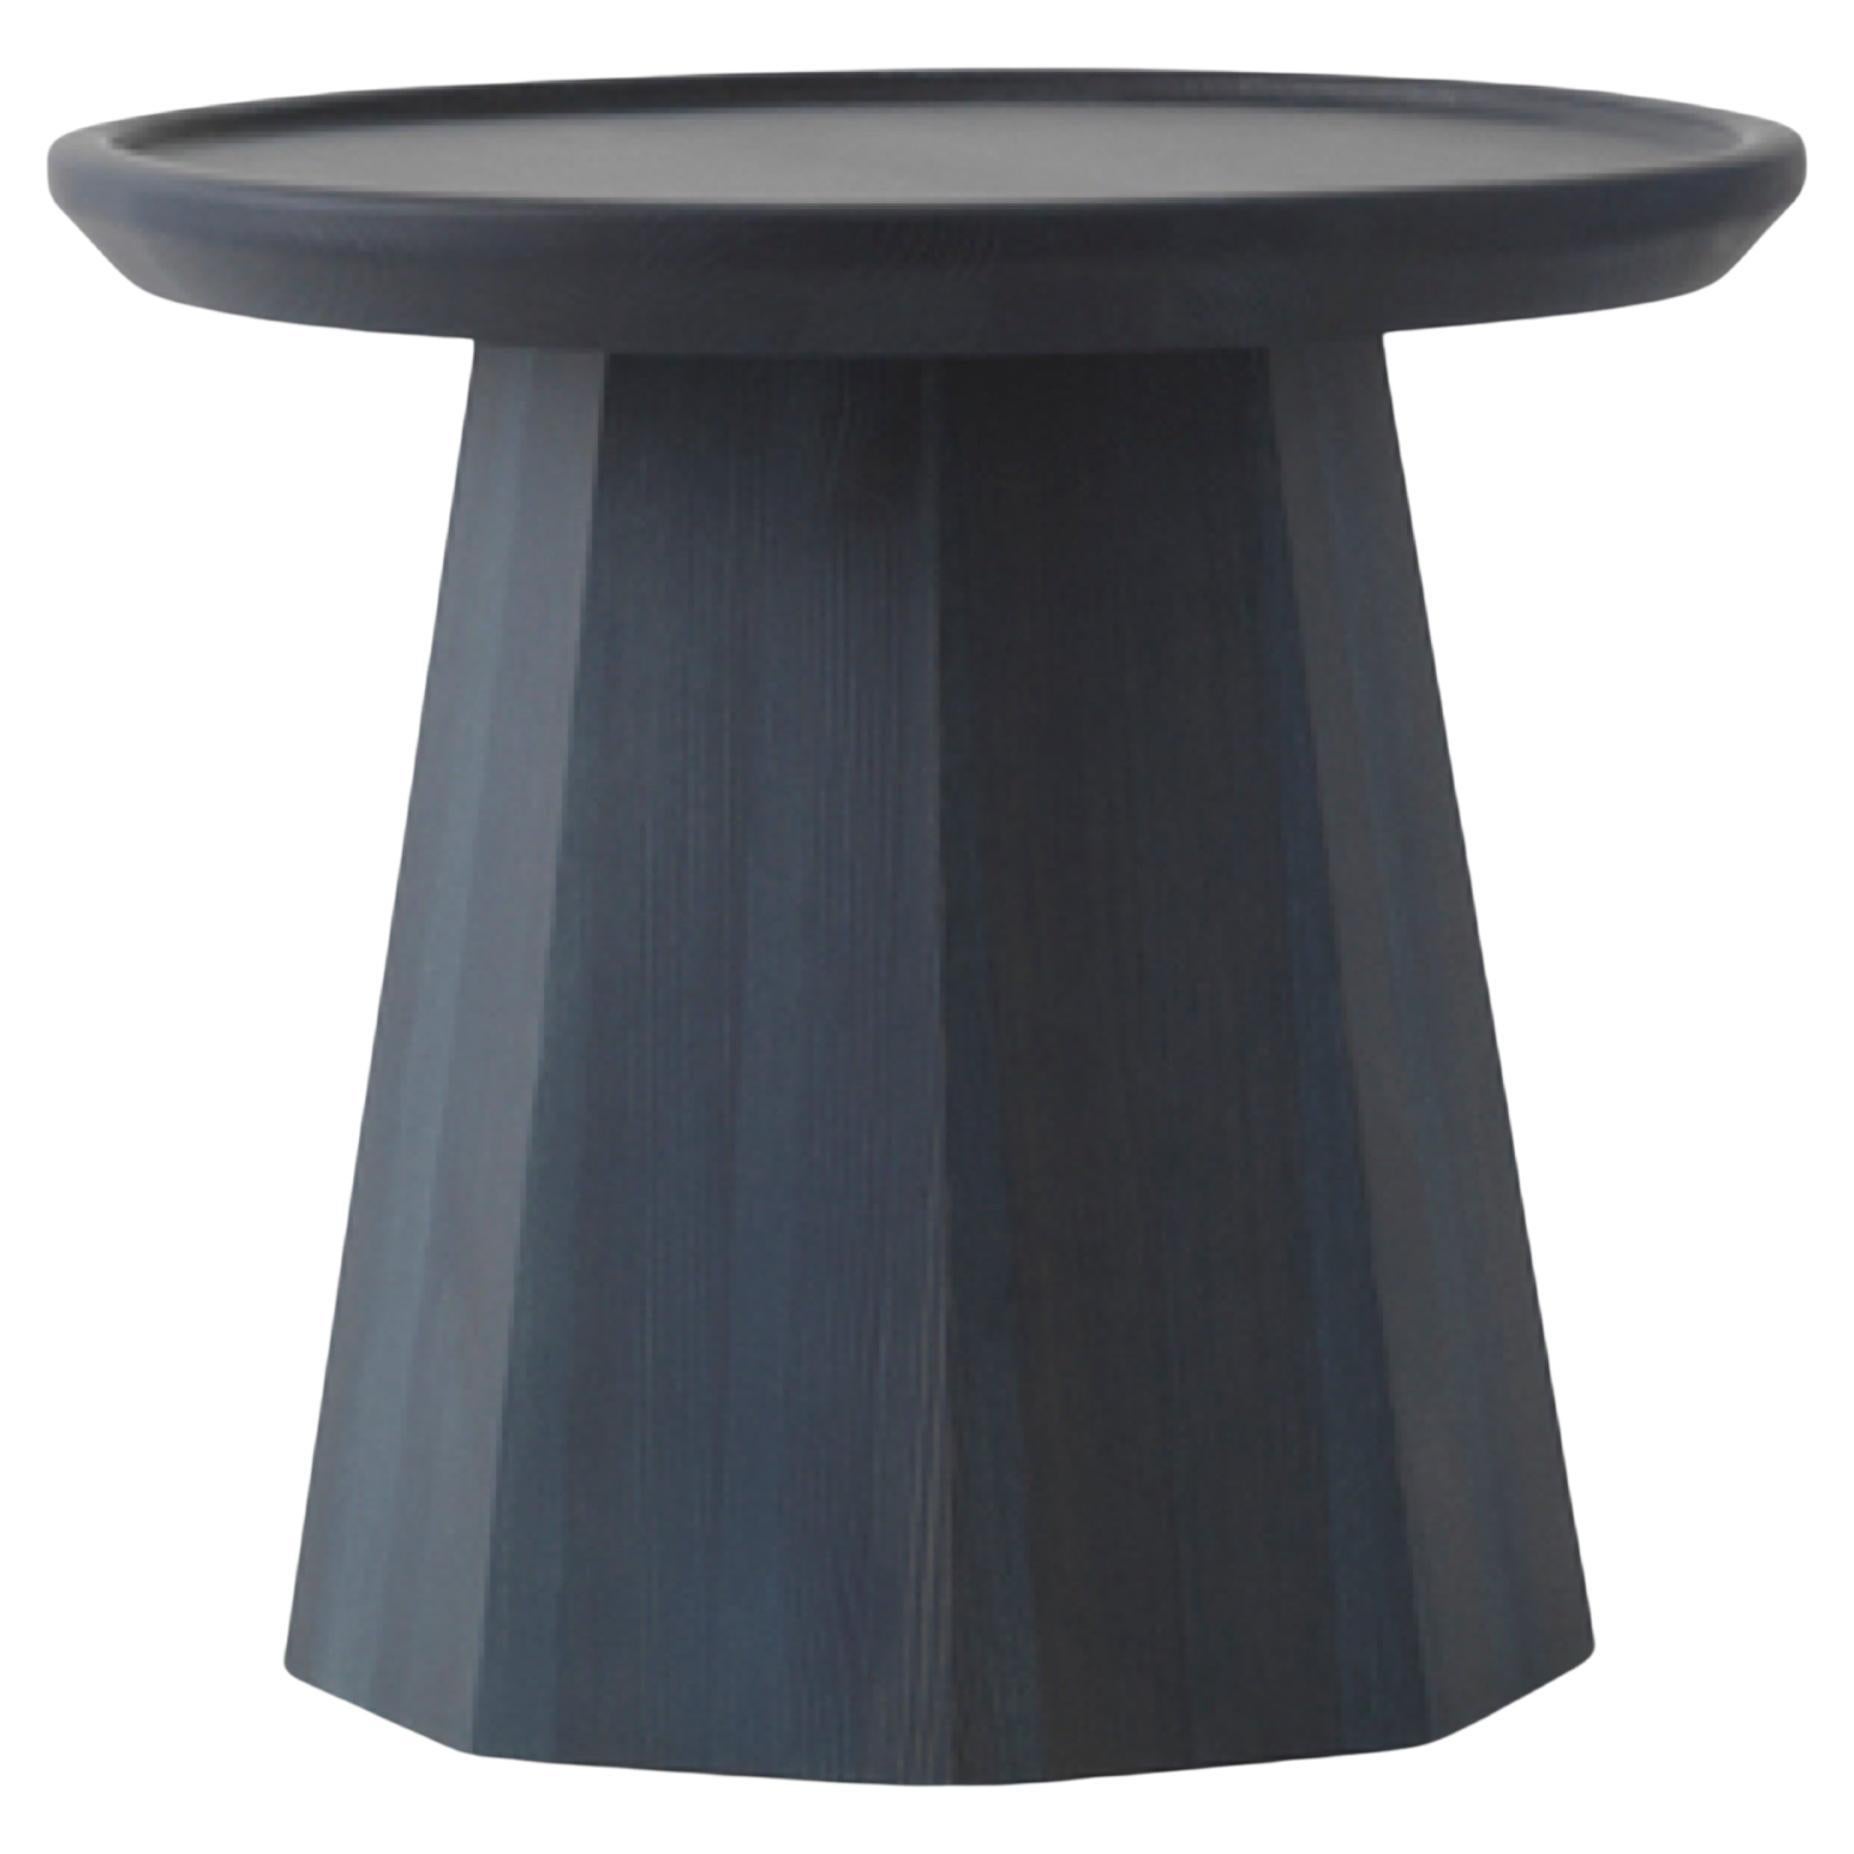 Normann Copenhagen Pine Dark Blue Small Table Designed by Simon Legald